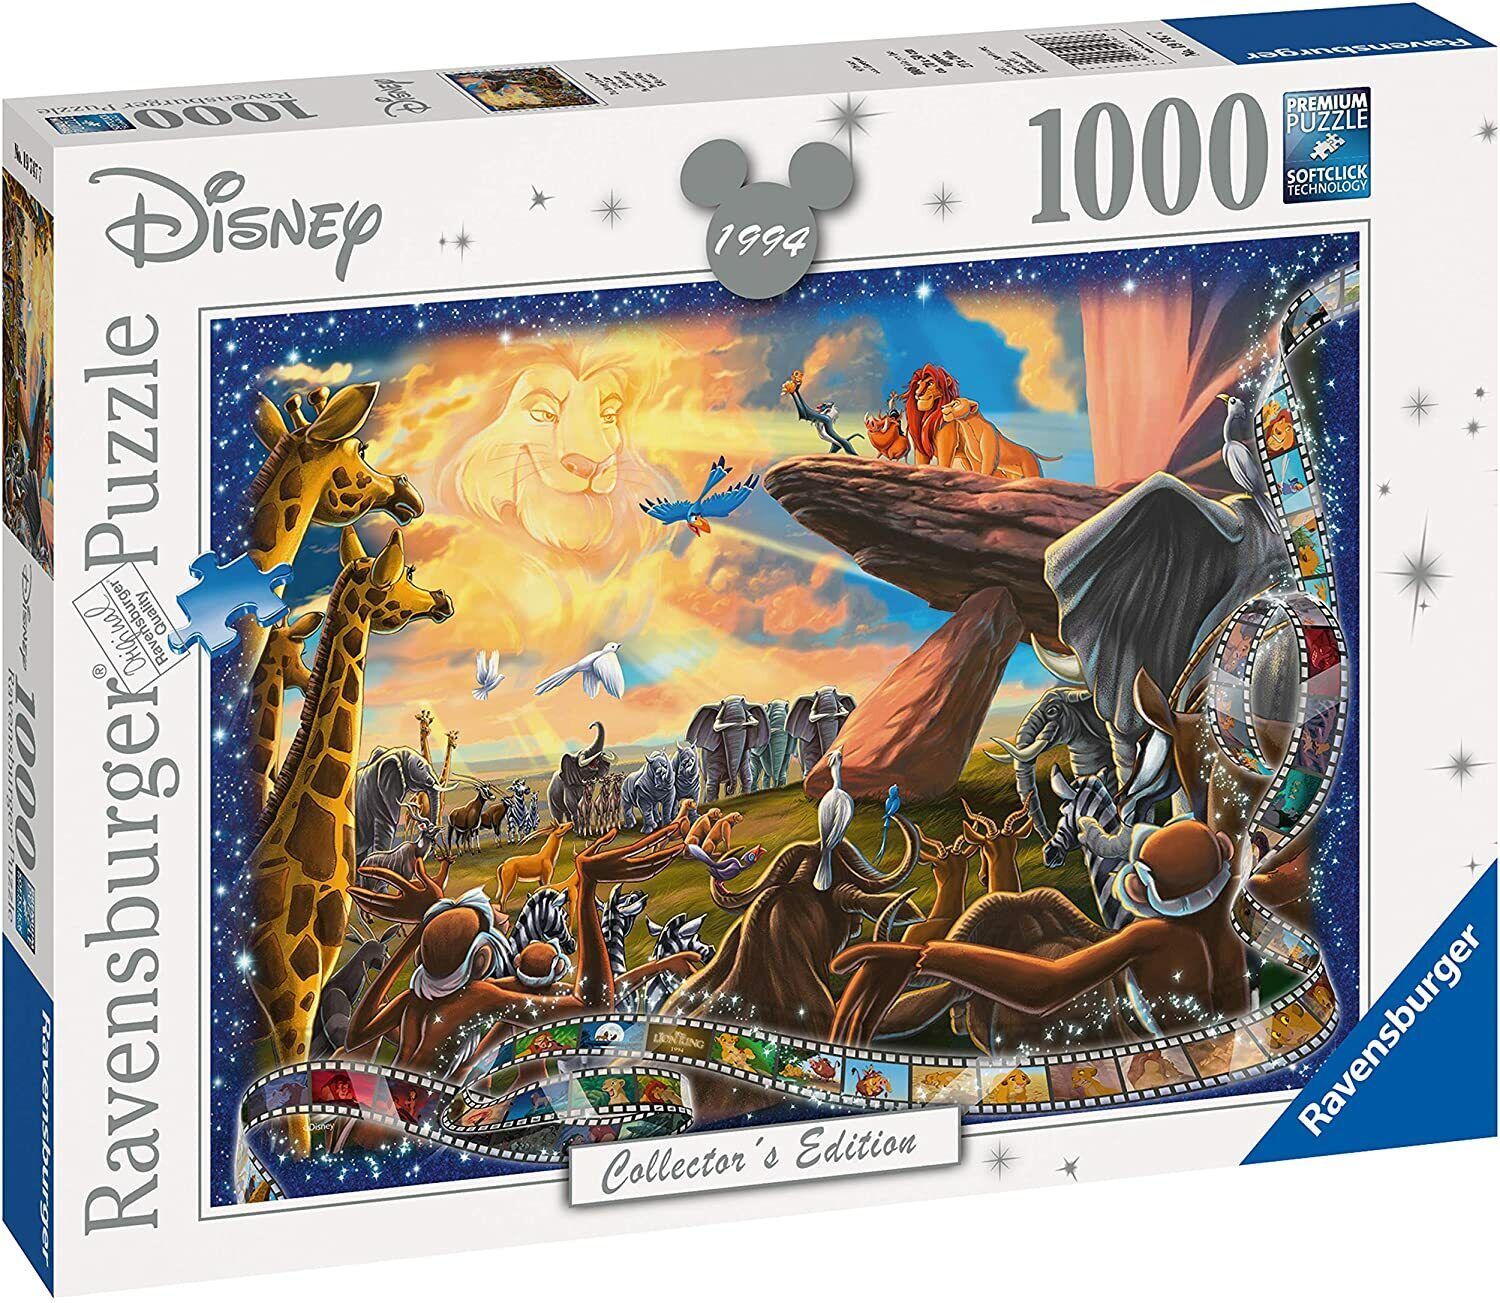 Ravensburger Disney Lion King Puzzle - Collector's Edition - 1000 Pieces